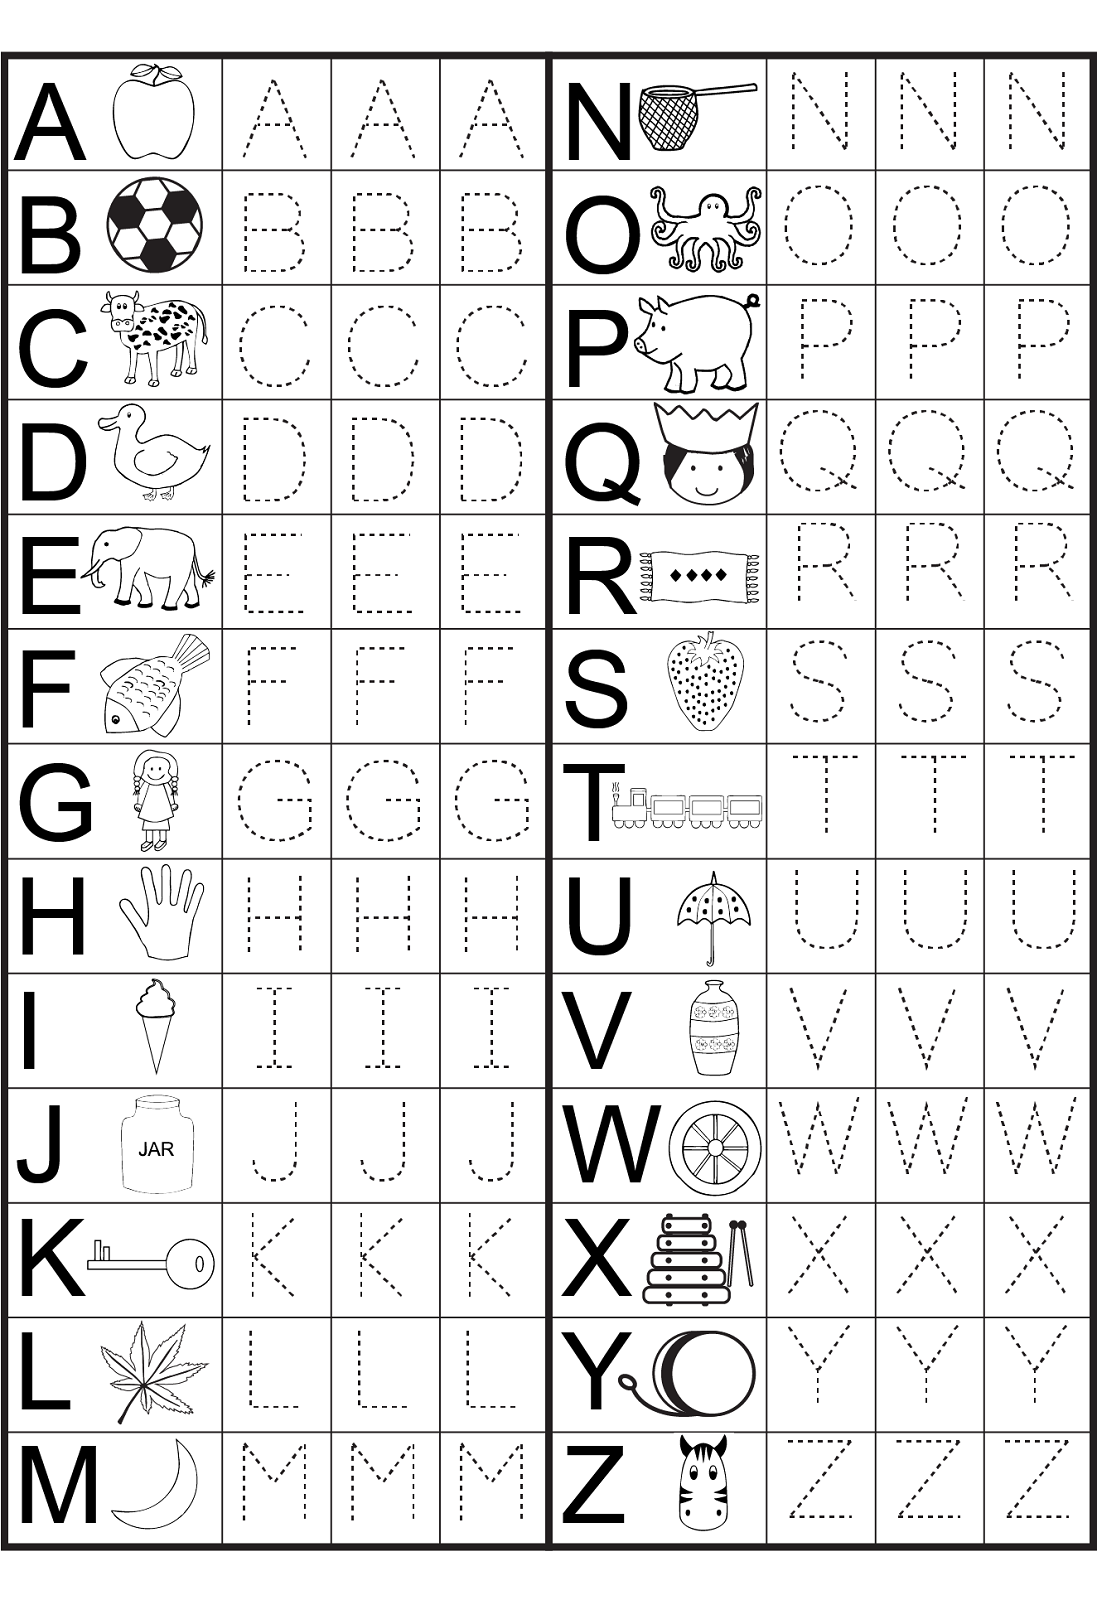 62 Alphabet Worksheets Preschool Printable Letters Photo pertaining to Alphabet Worksheets Preschool Free